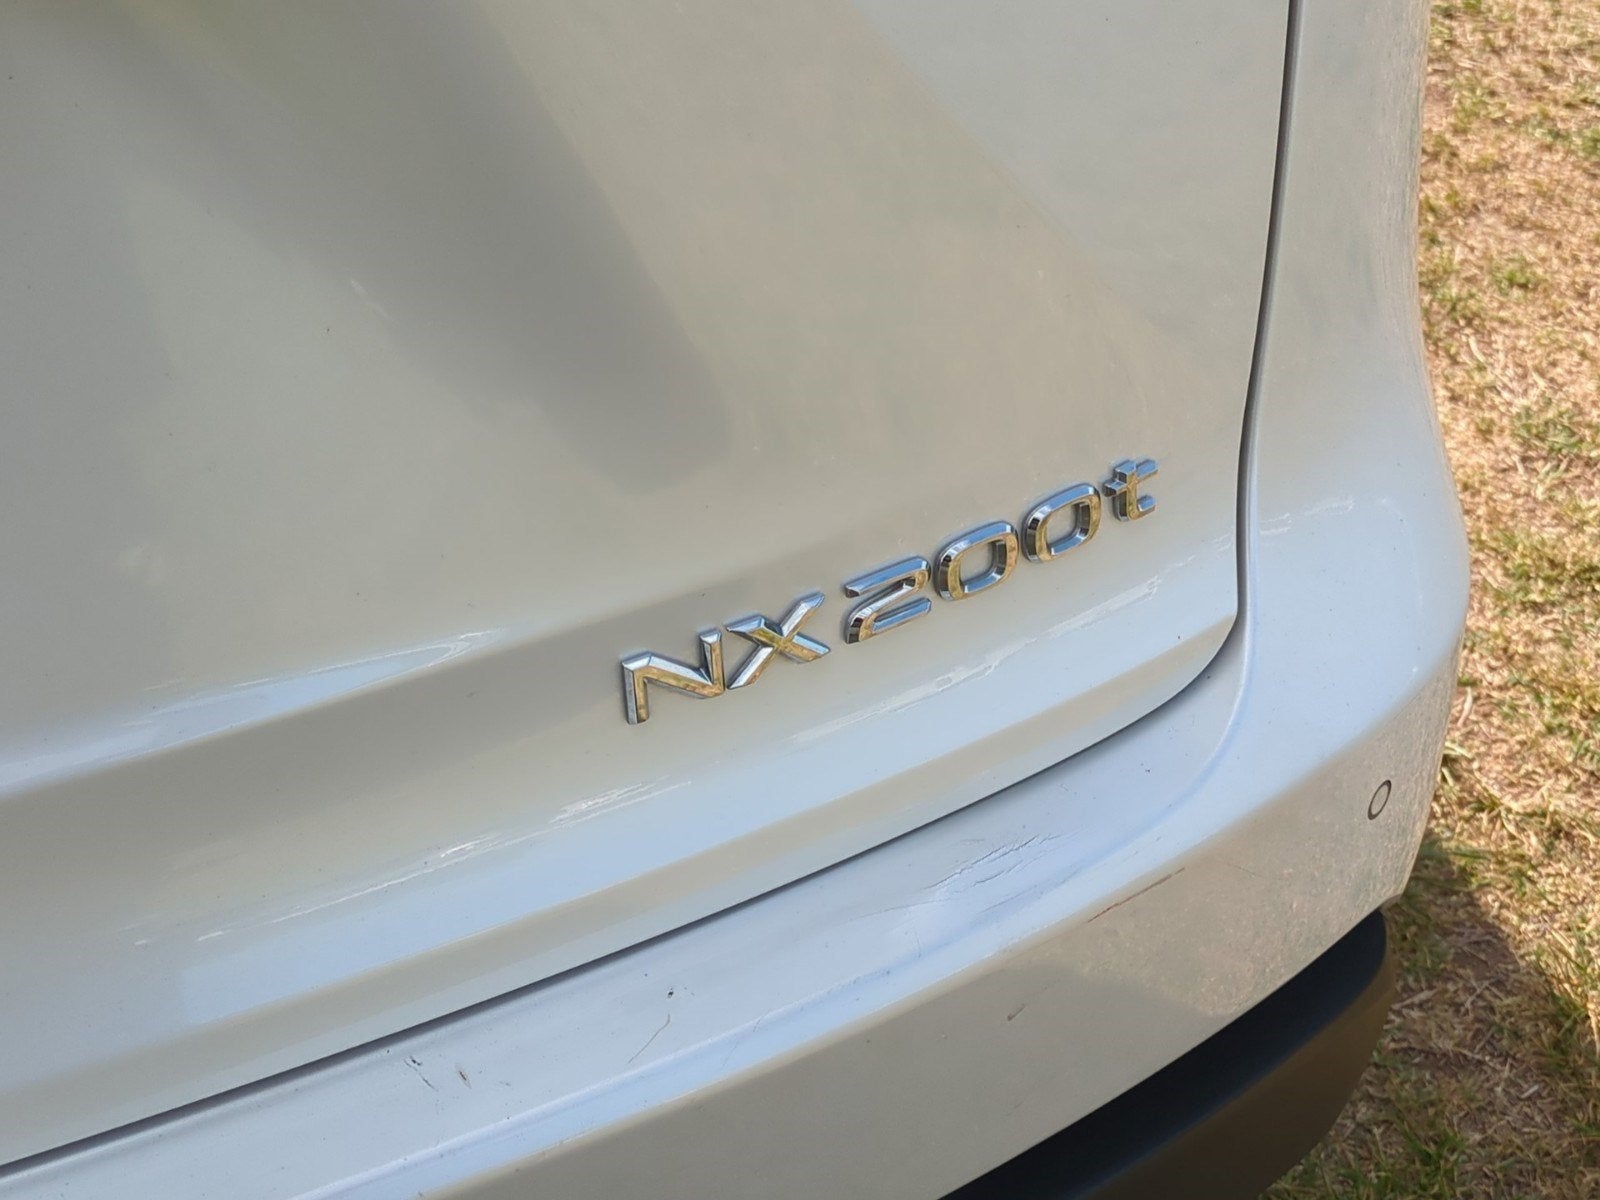 2017 Lexus NX 200t